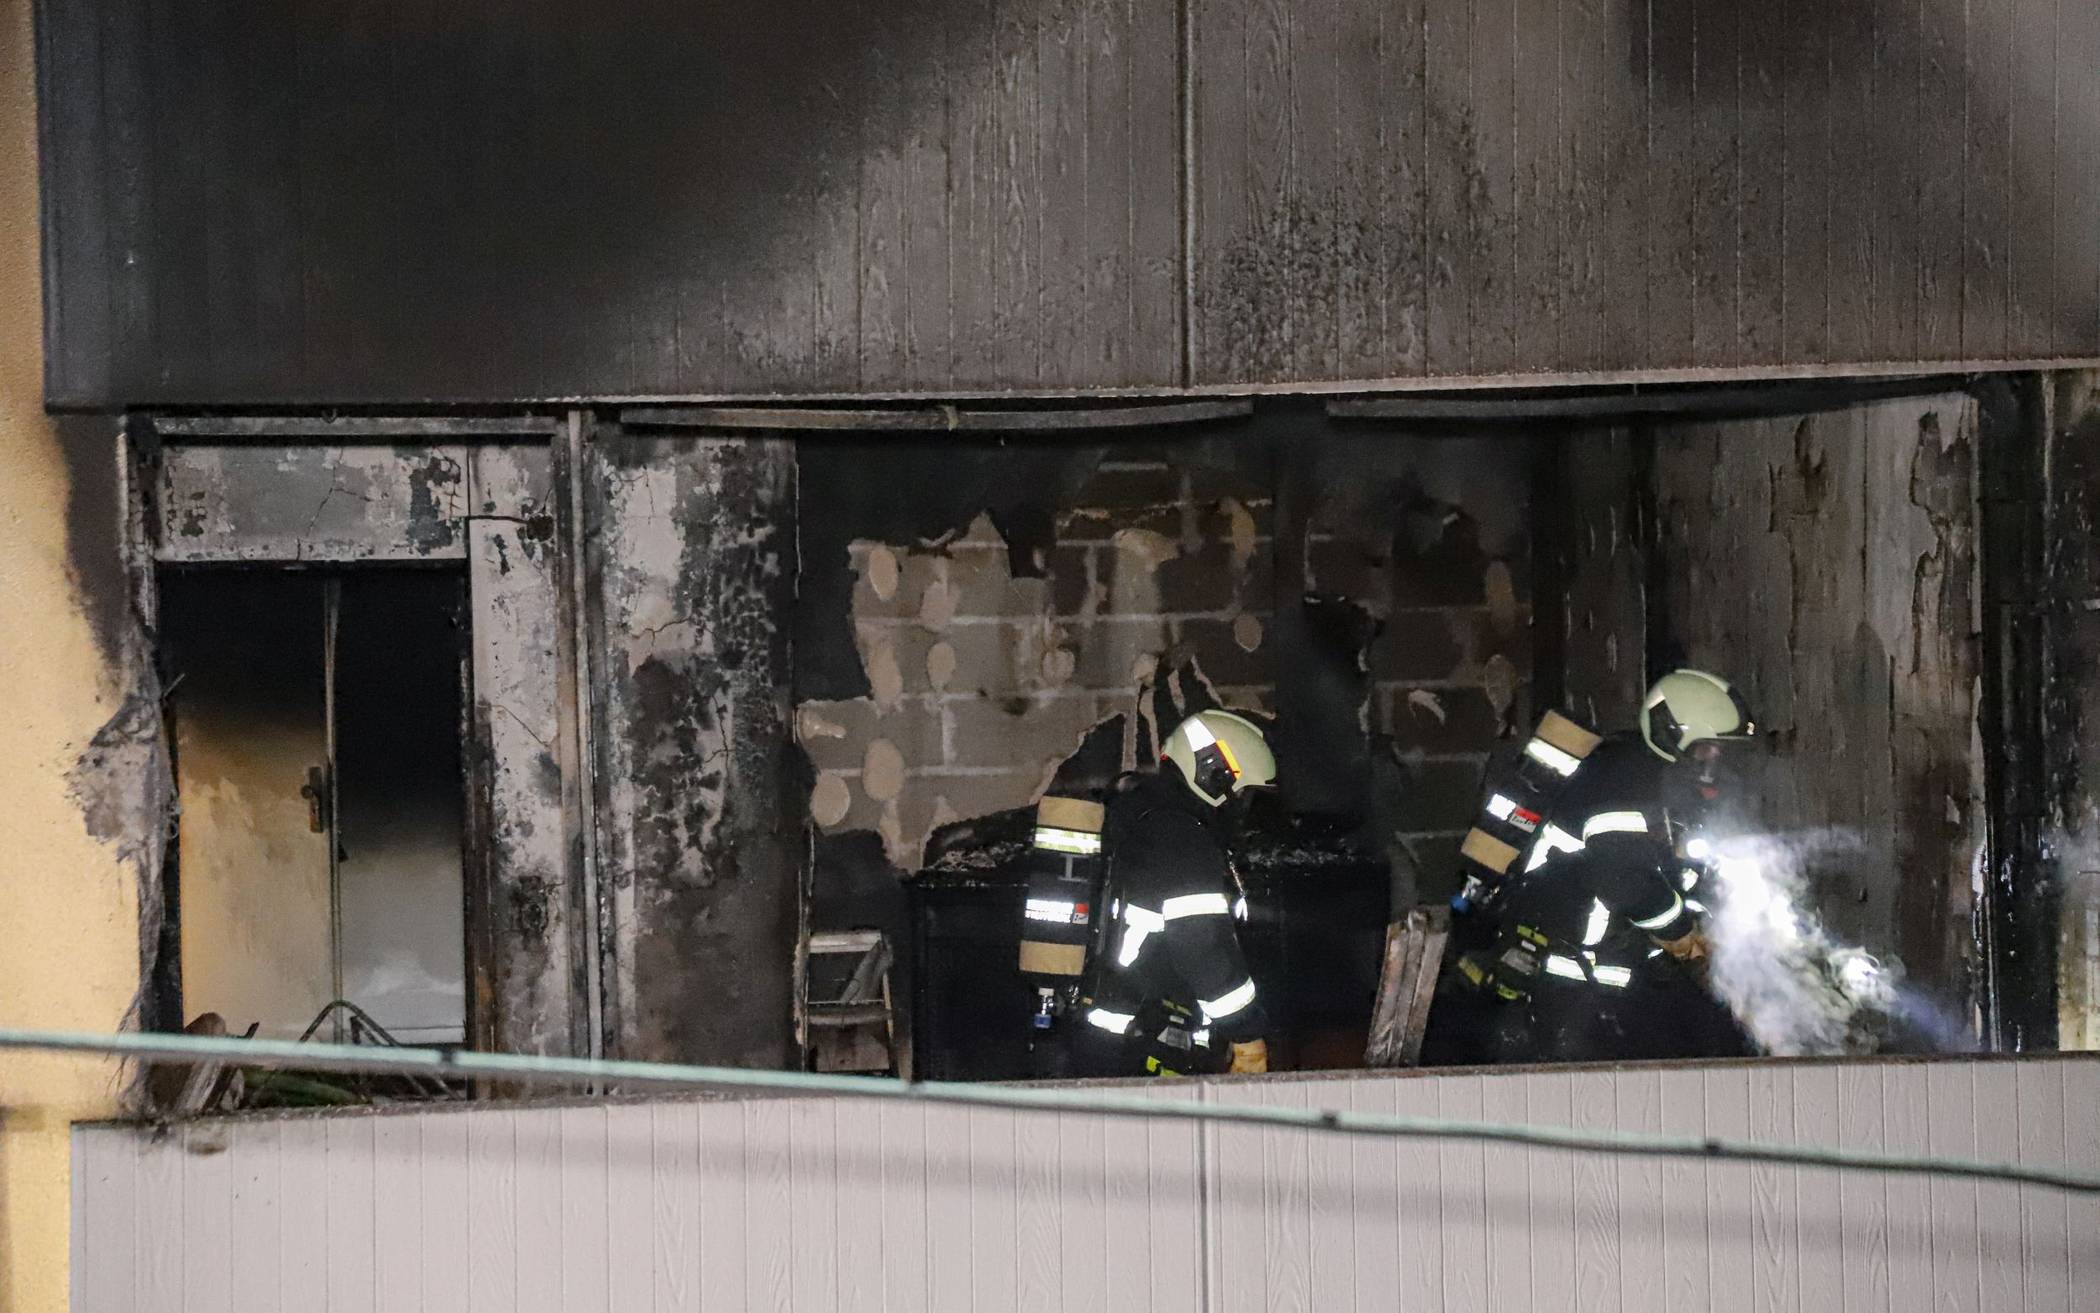 Bilder: Großbrand in Wohngebäude​ in Wuppertal-Wichlinghausen